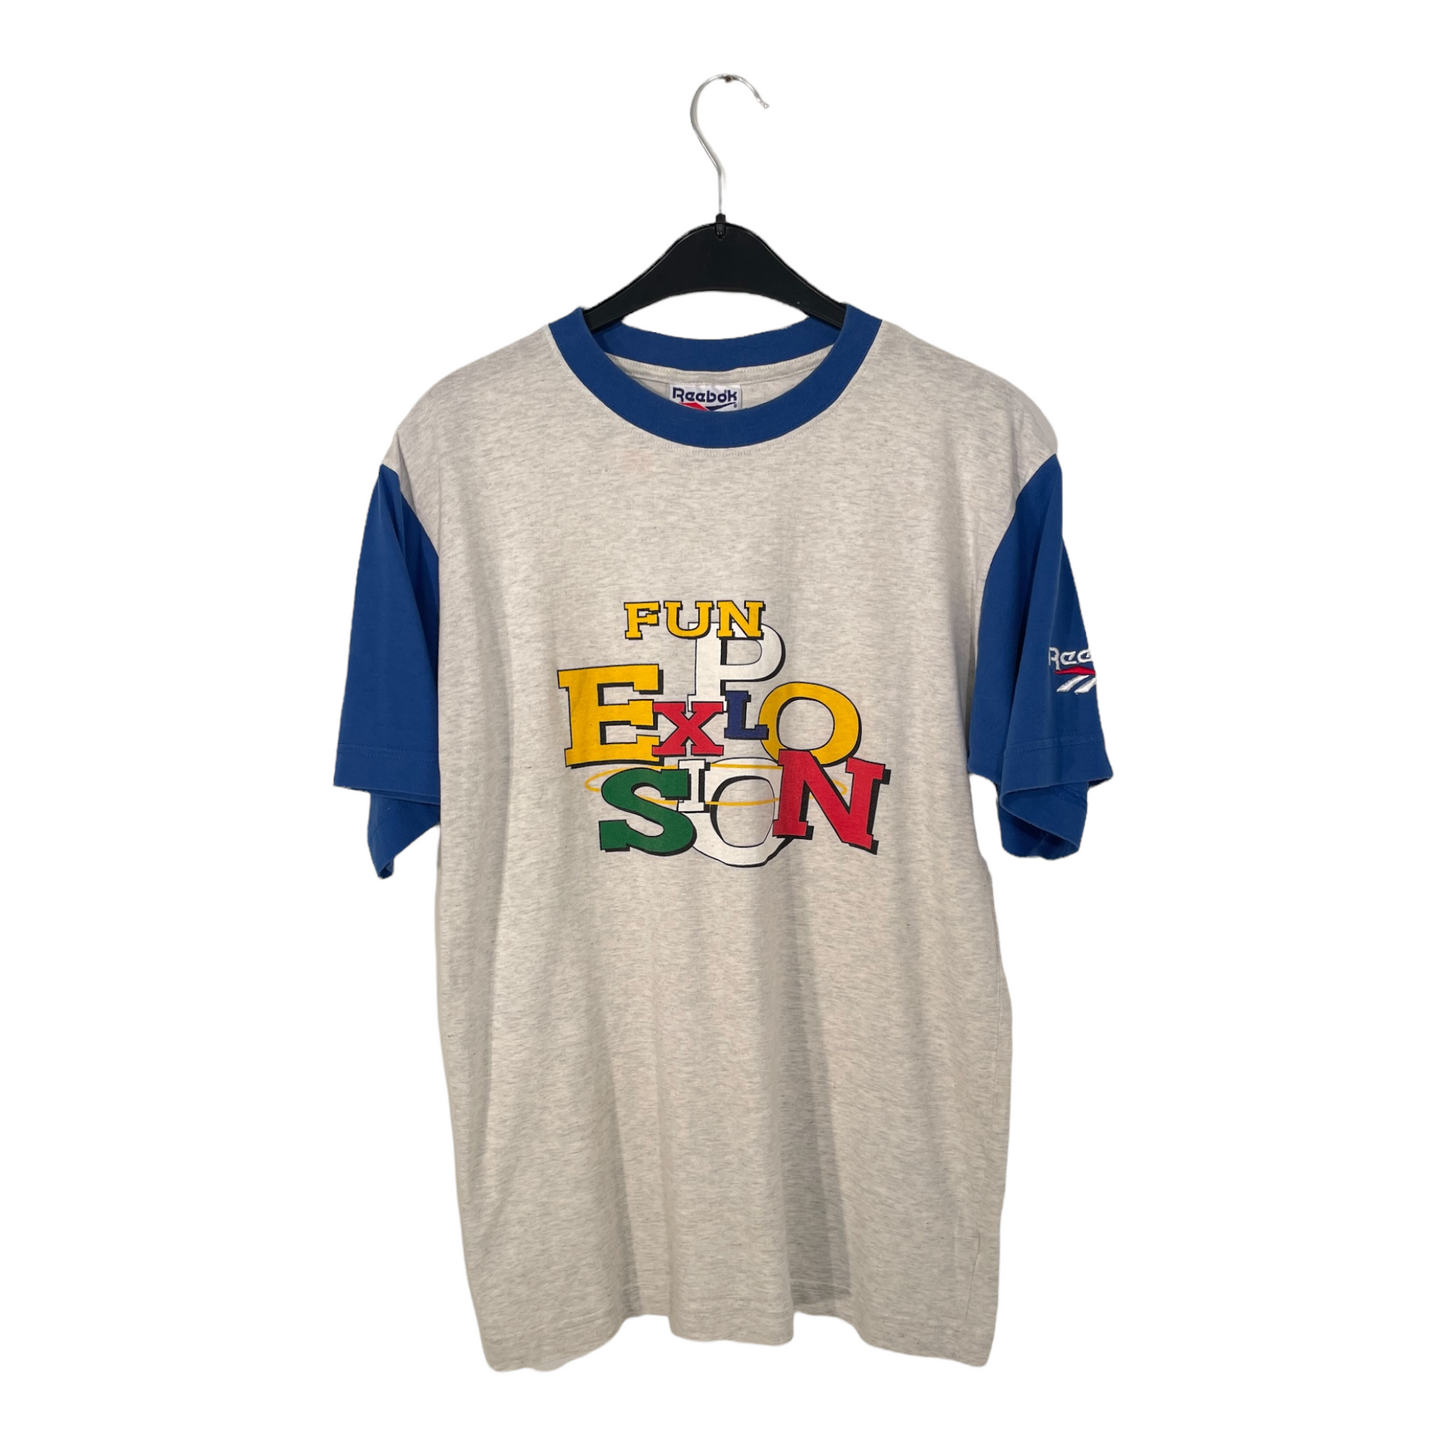 Reebok Fun T-Shirt